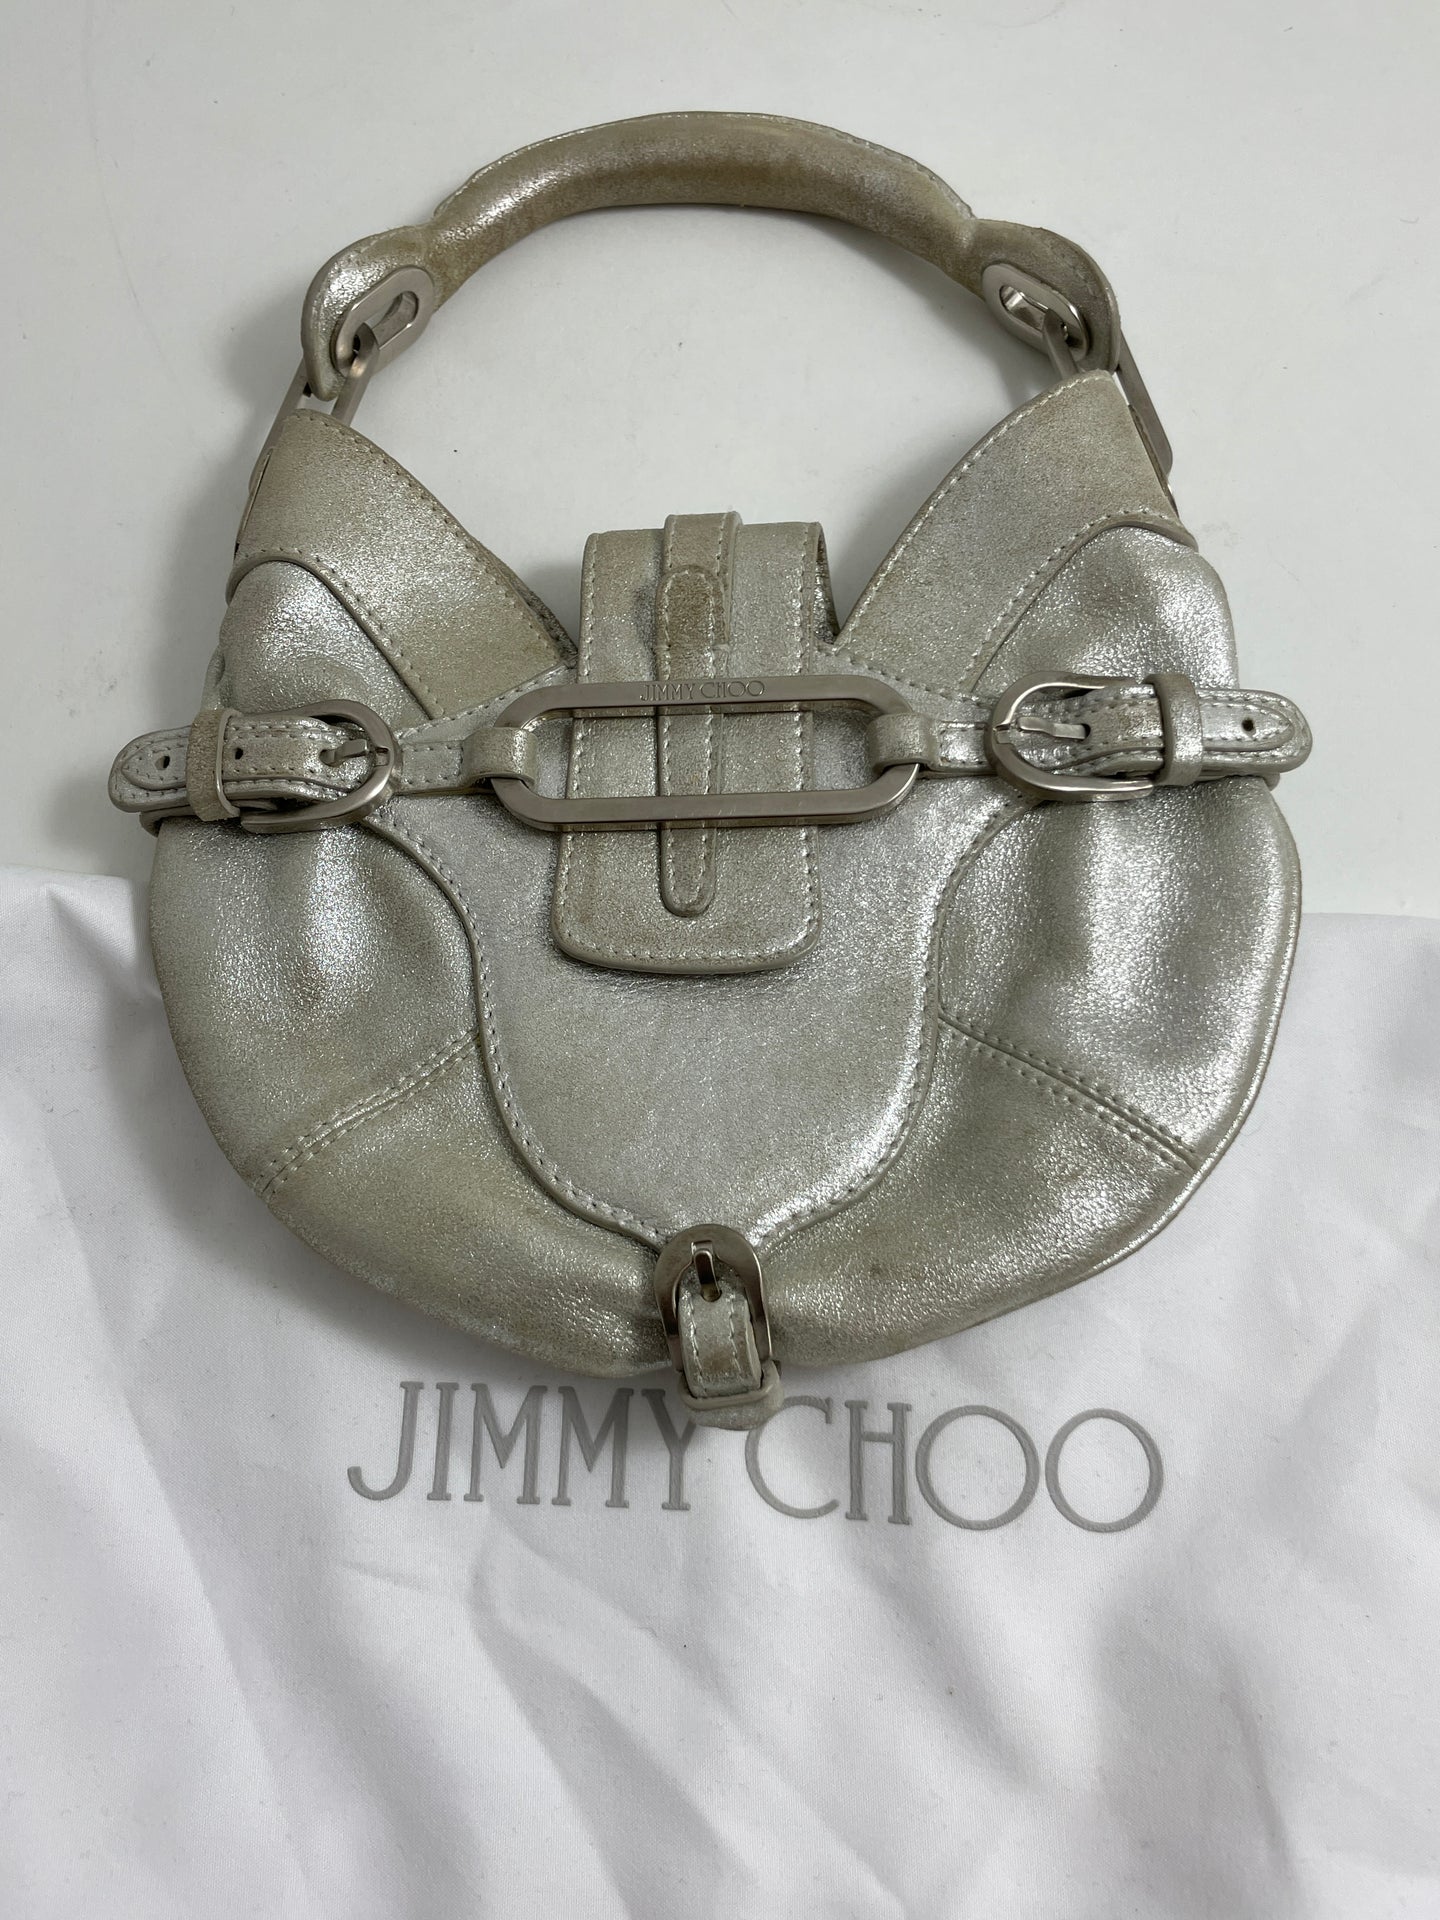 Jimmy Choo Metallic Silver Leather Mini Top Handle Bag